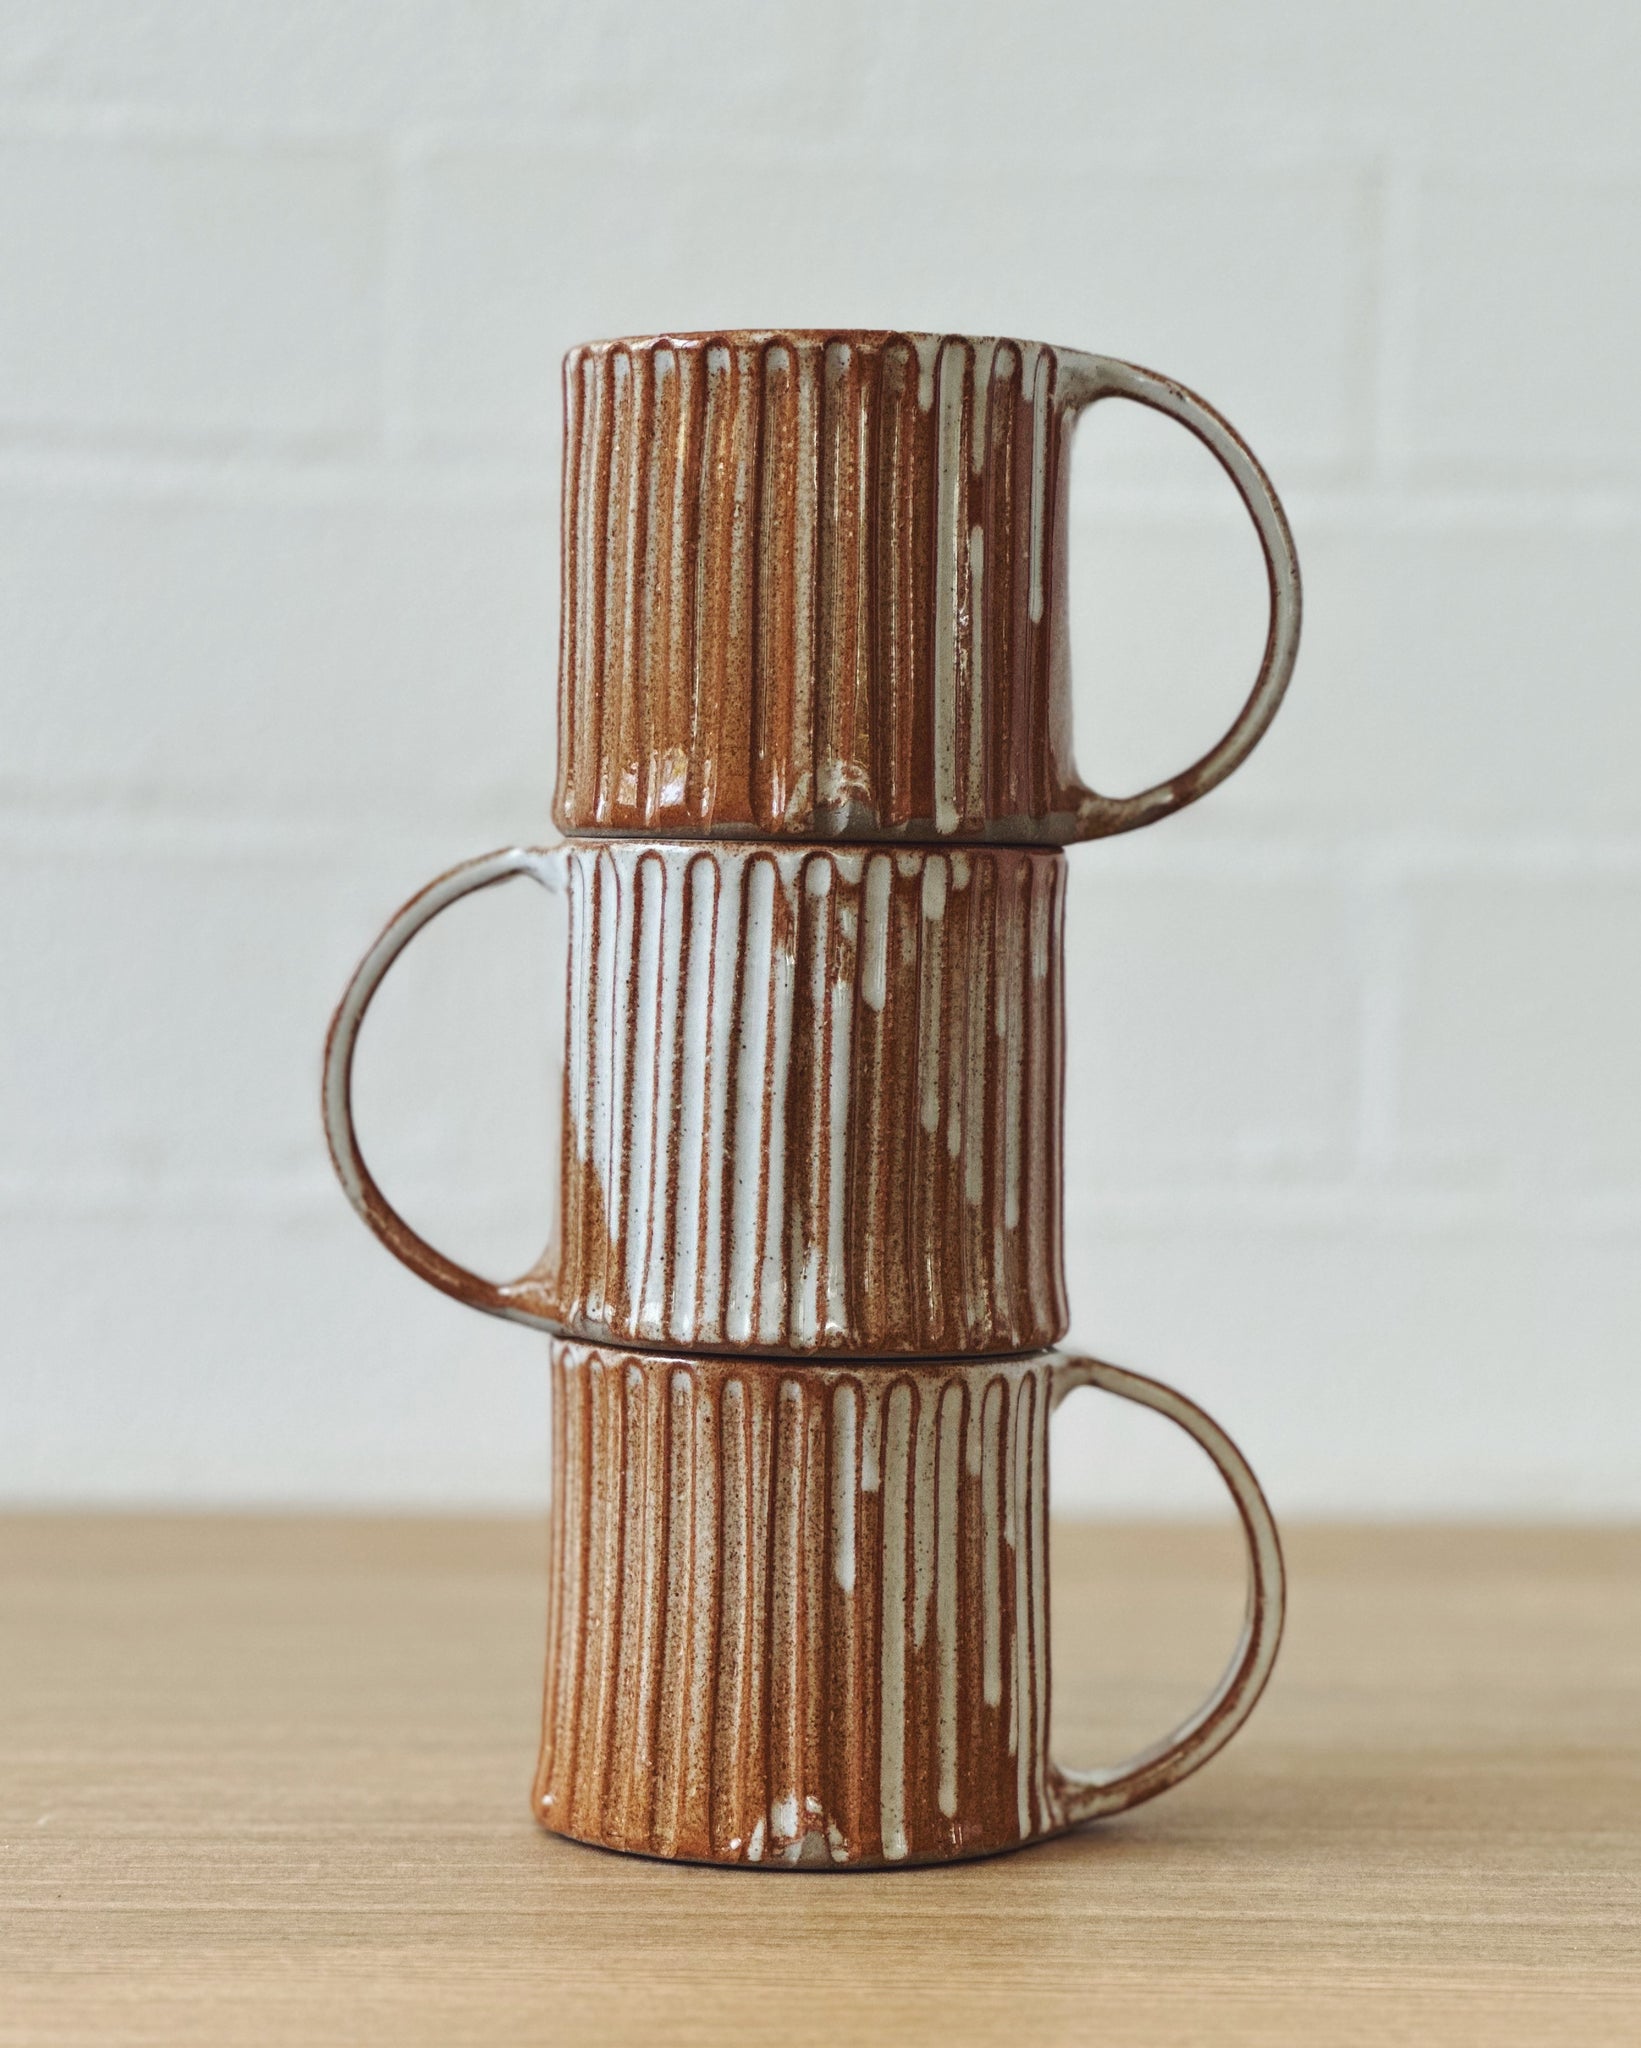 LIMITED EDITION: Carved toffee mug - regular